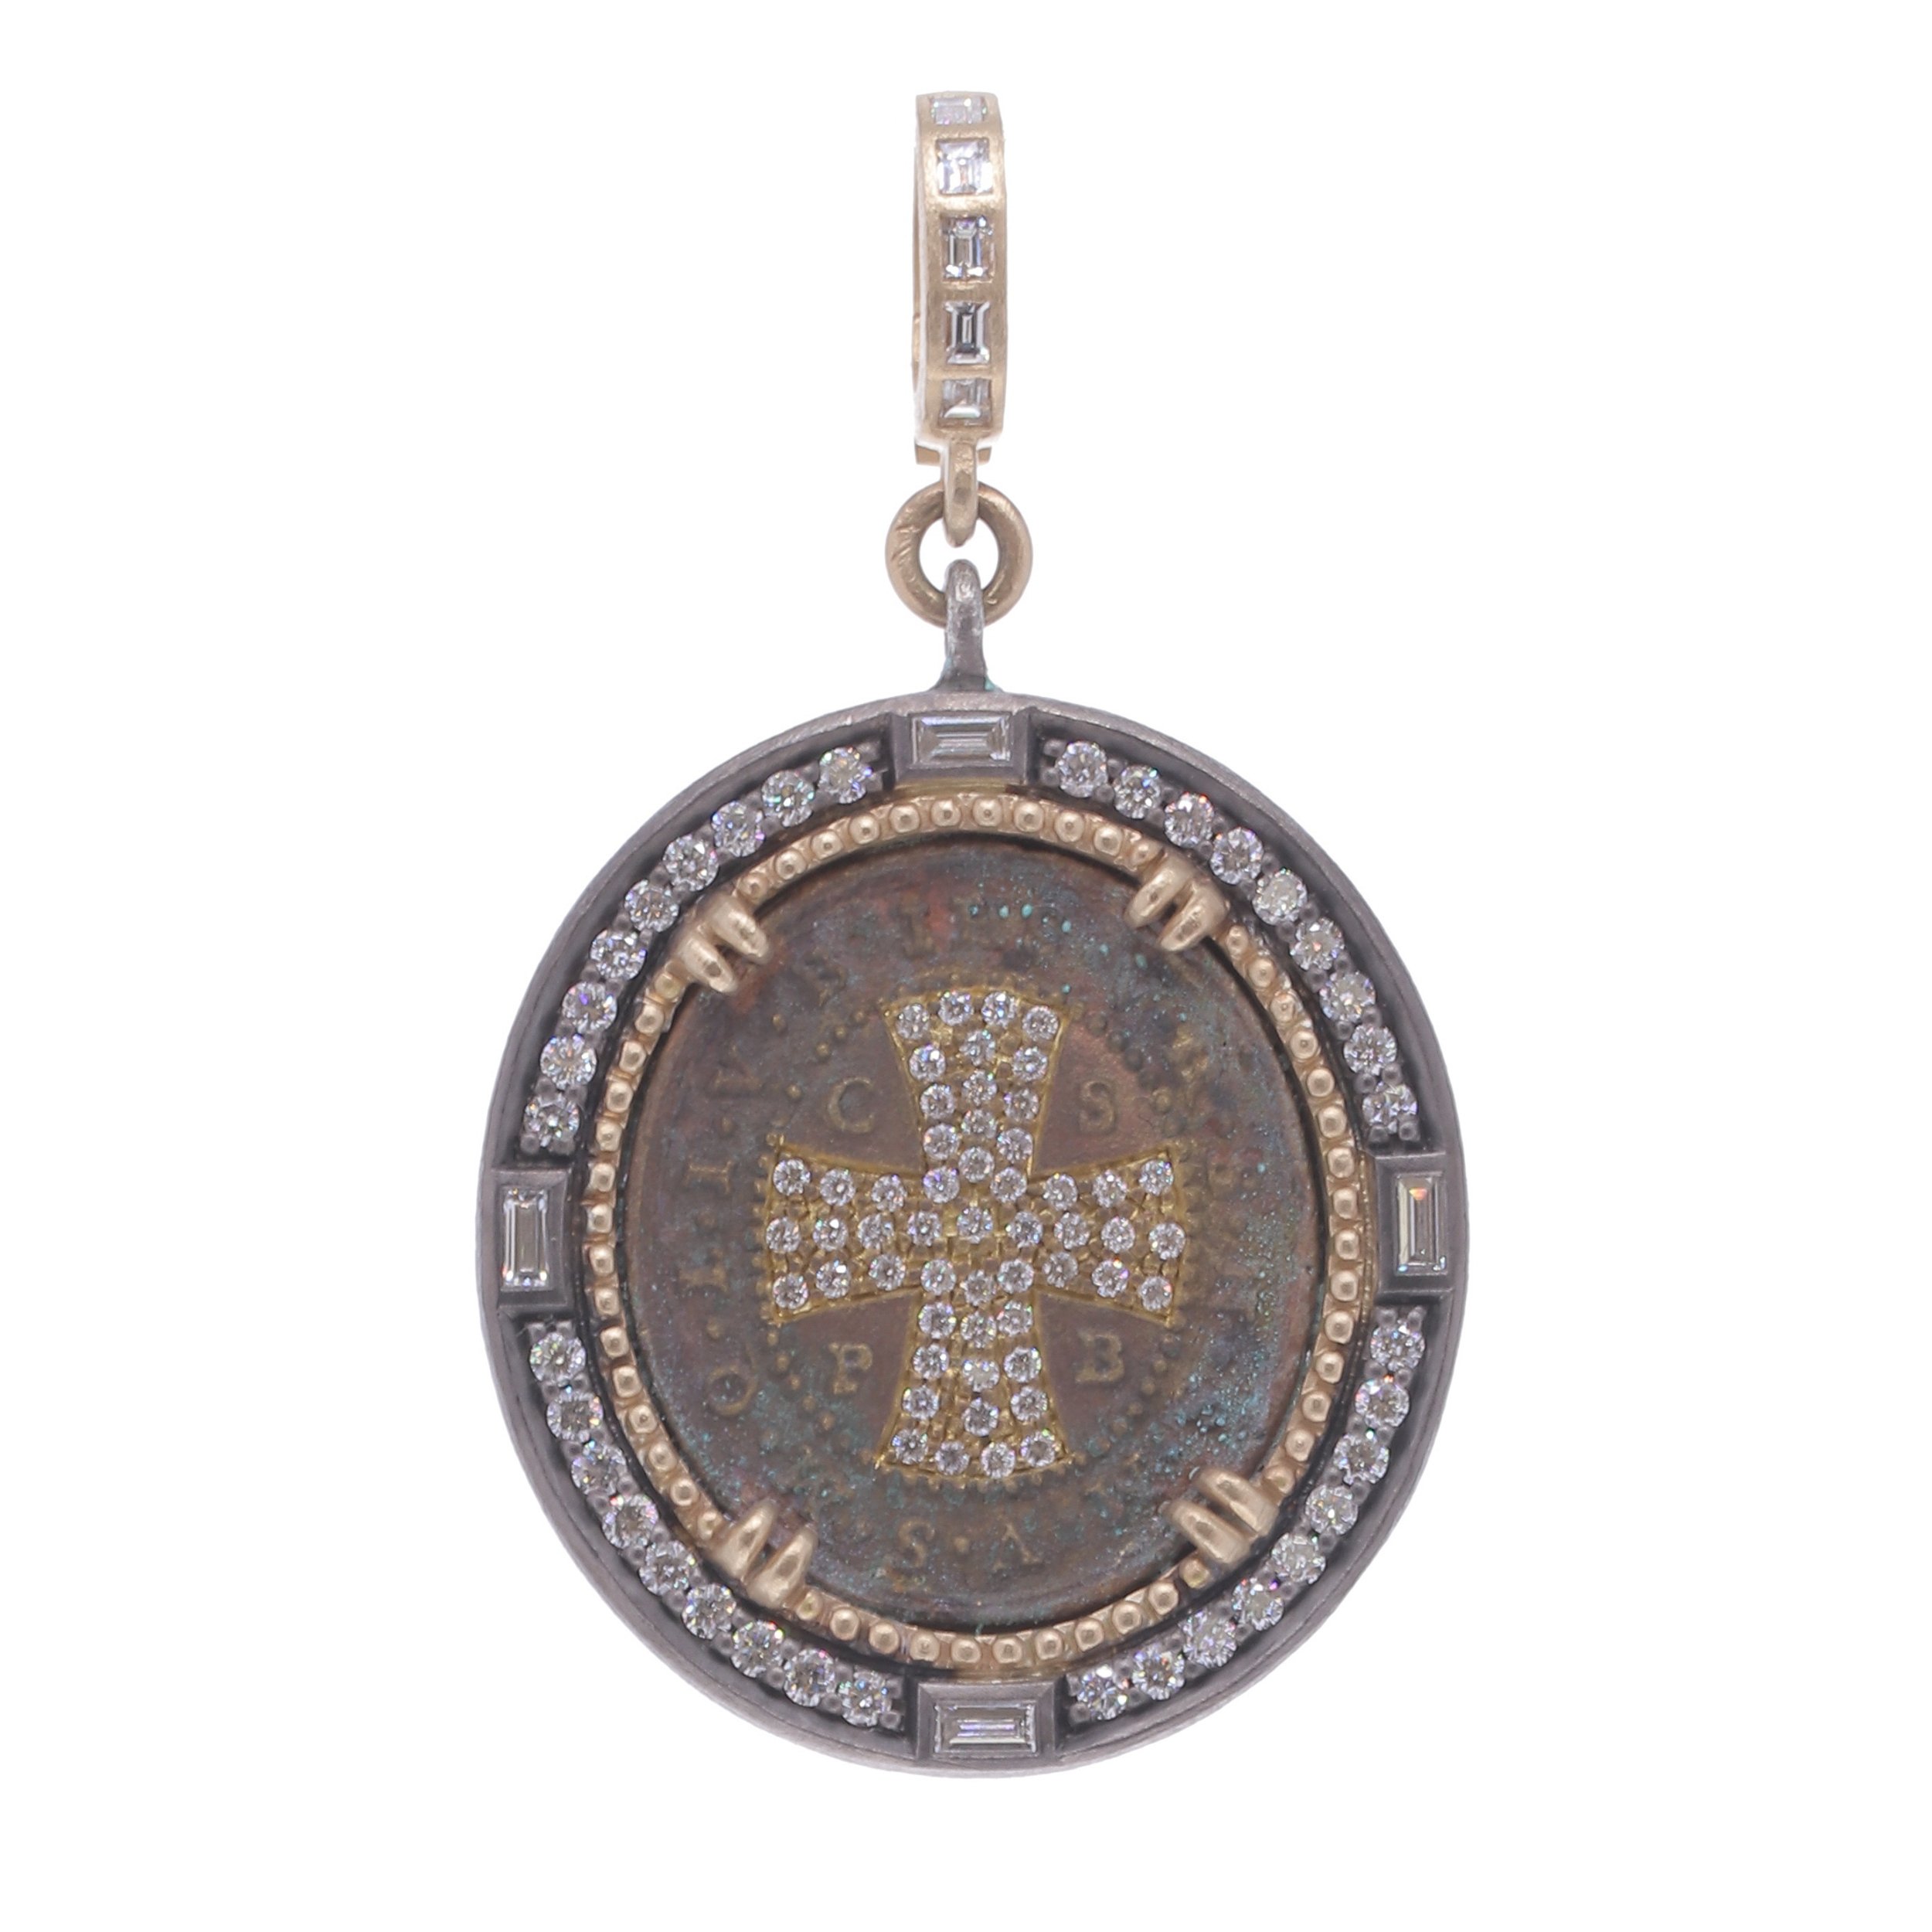 Antique St Benedict Medal set in 14k with Diamonds14k: 6.91gBRHSSt Benedict w/InlayWDIA: 1.15tcw